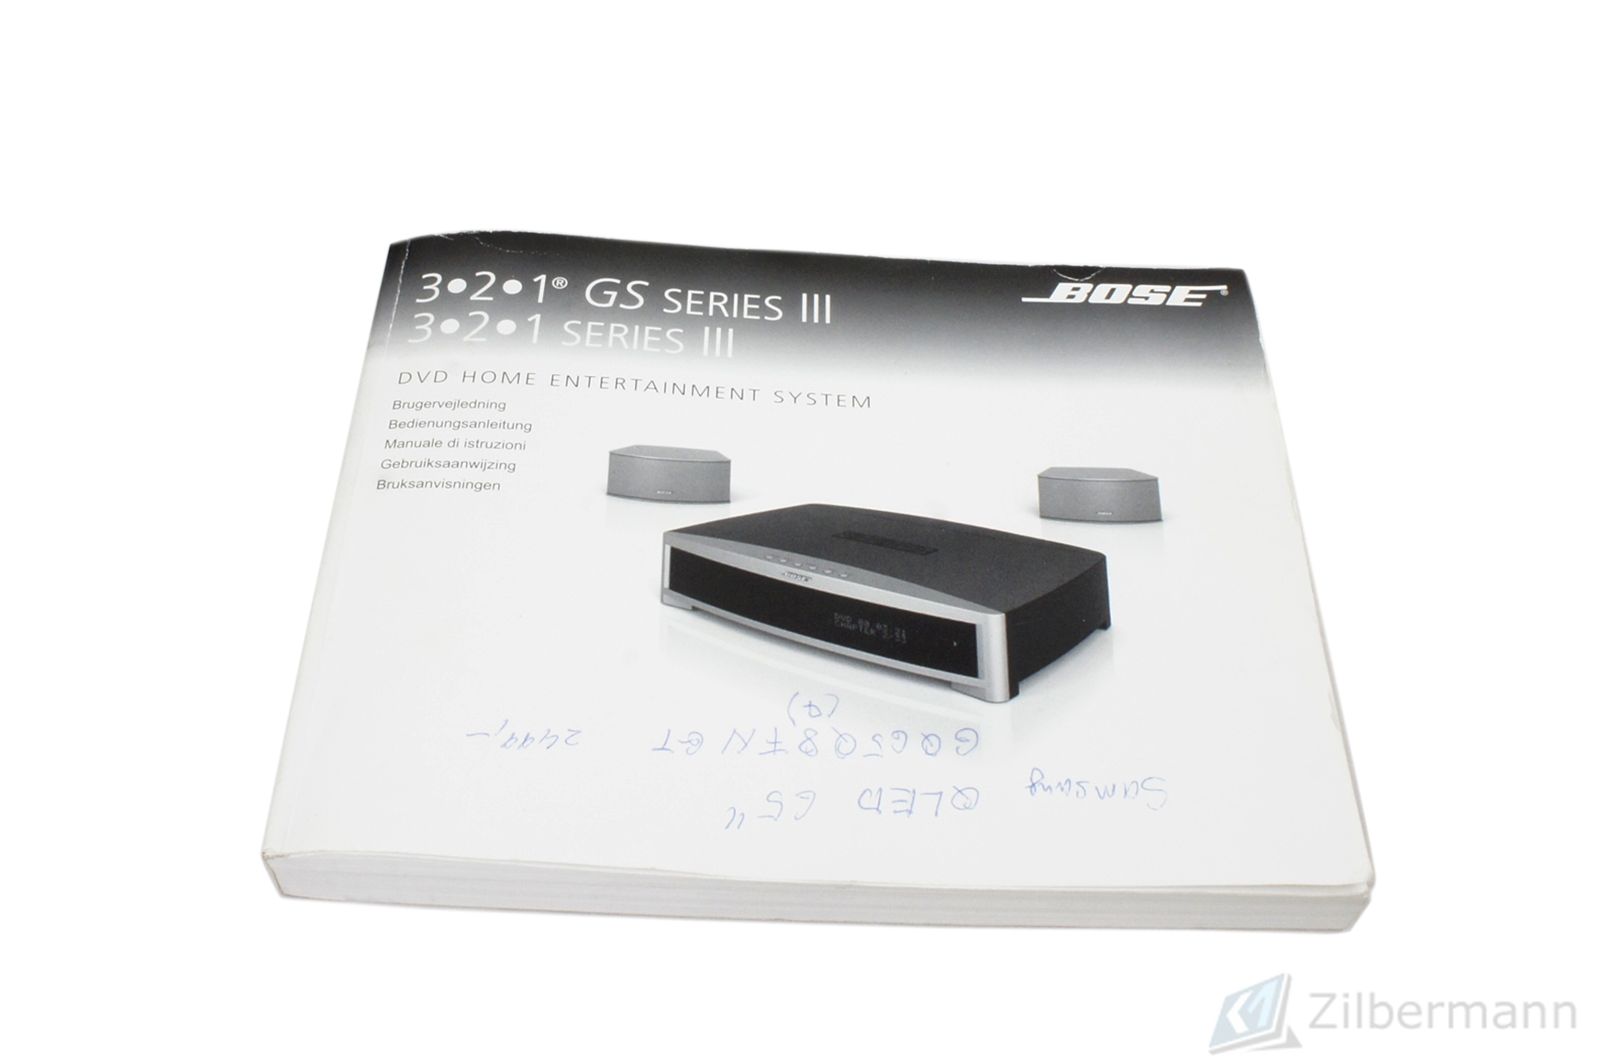 Bose_Acoustimass_321_3-2-1_Series_III_Heimkino-system_mit_HDMI_20